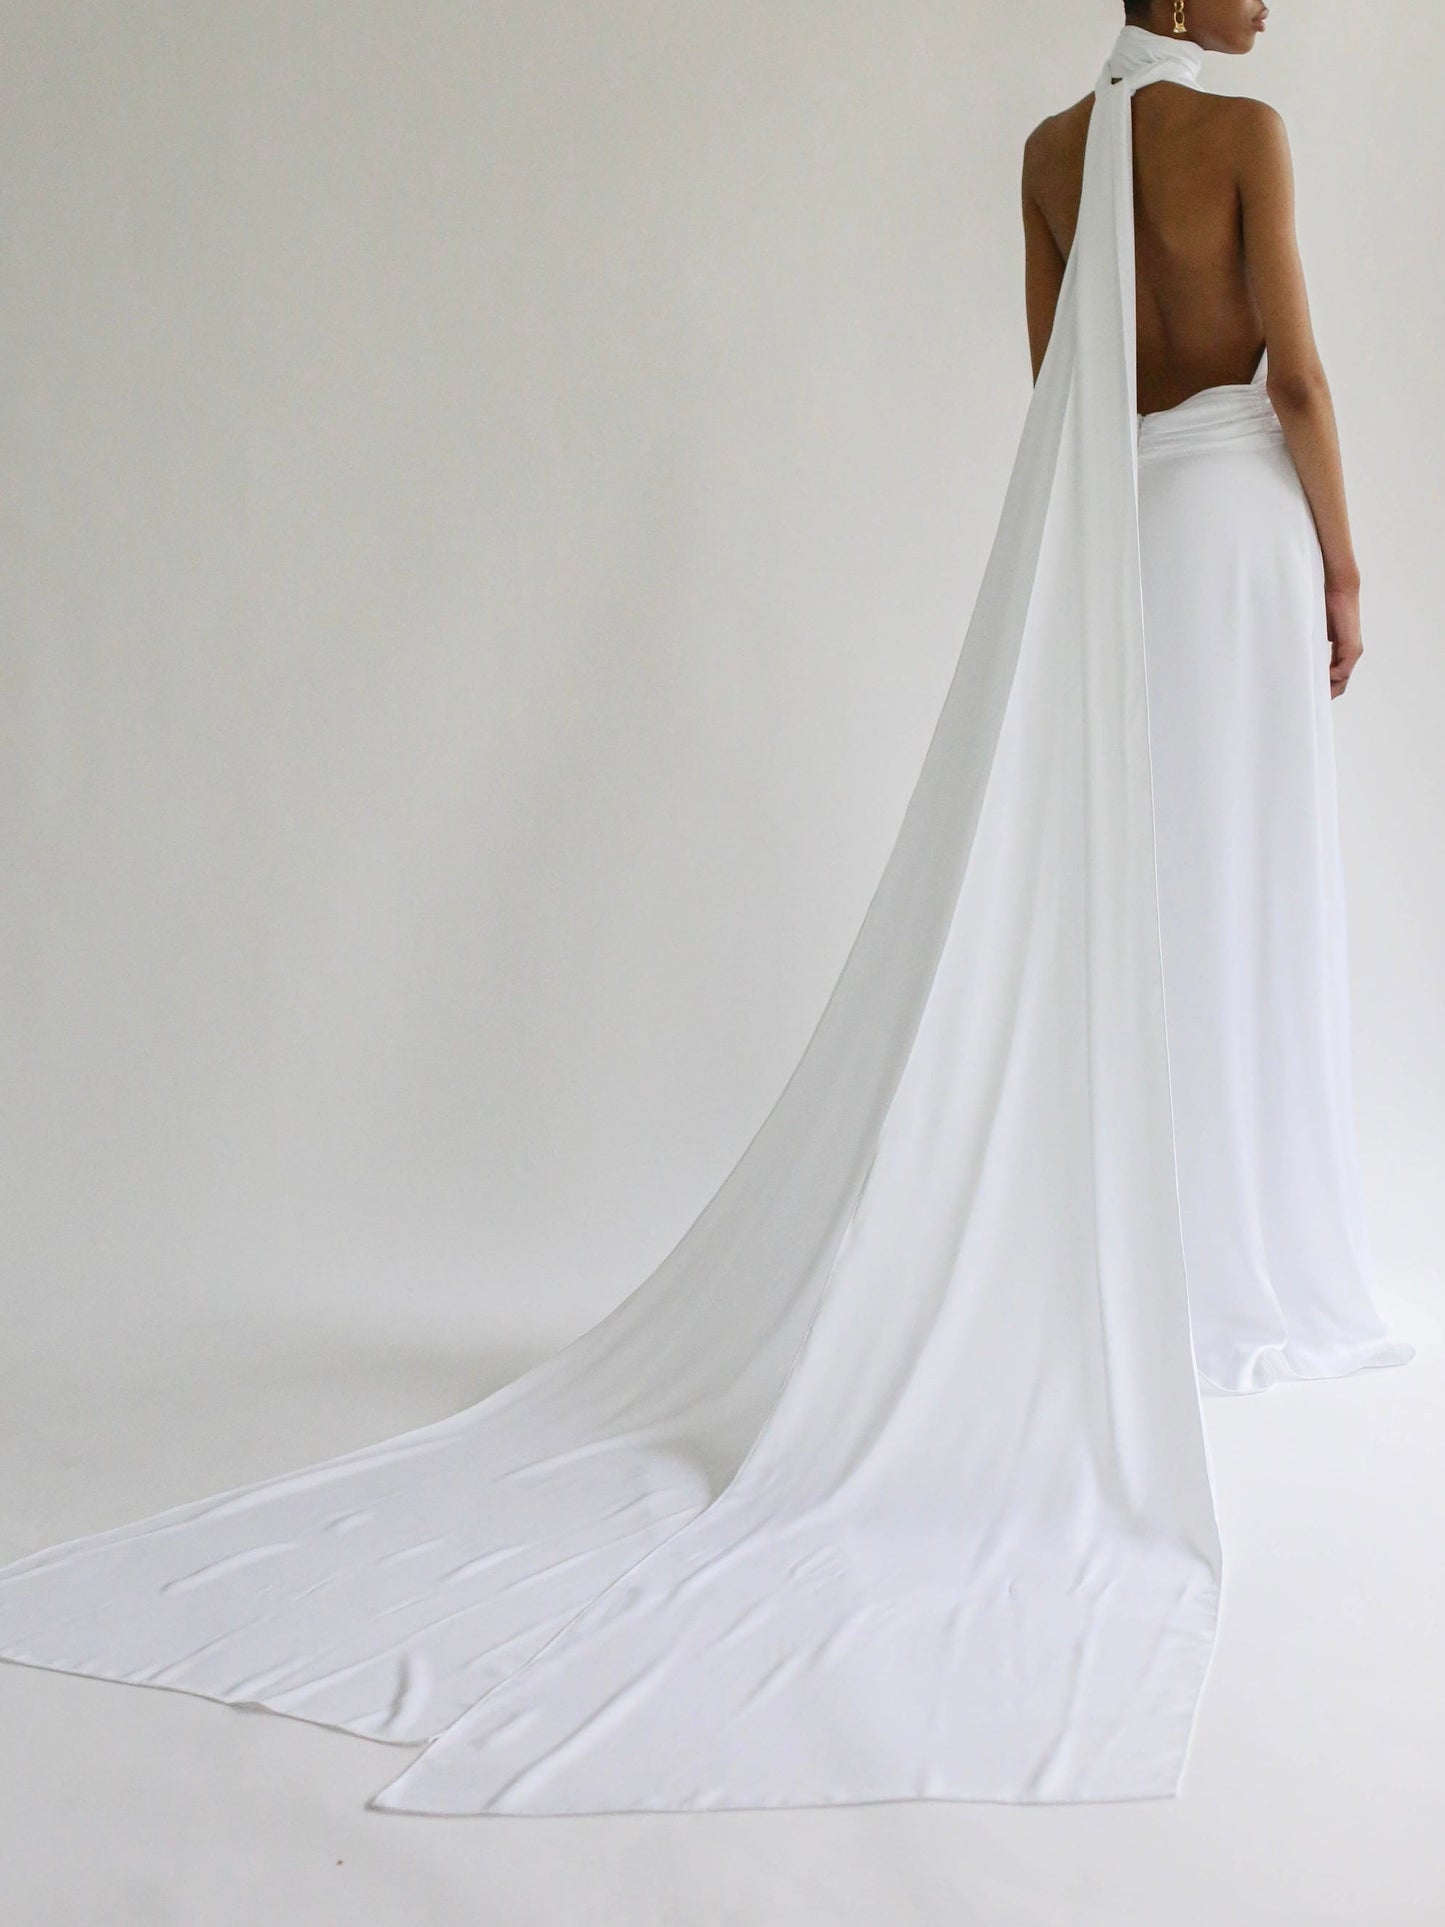 Stun in this simple yet elegant wedding dress